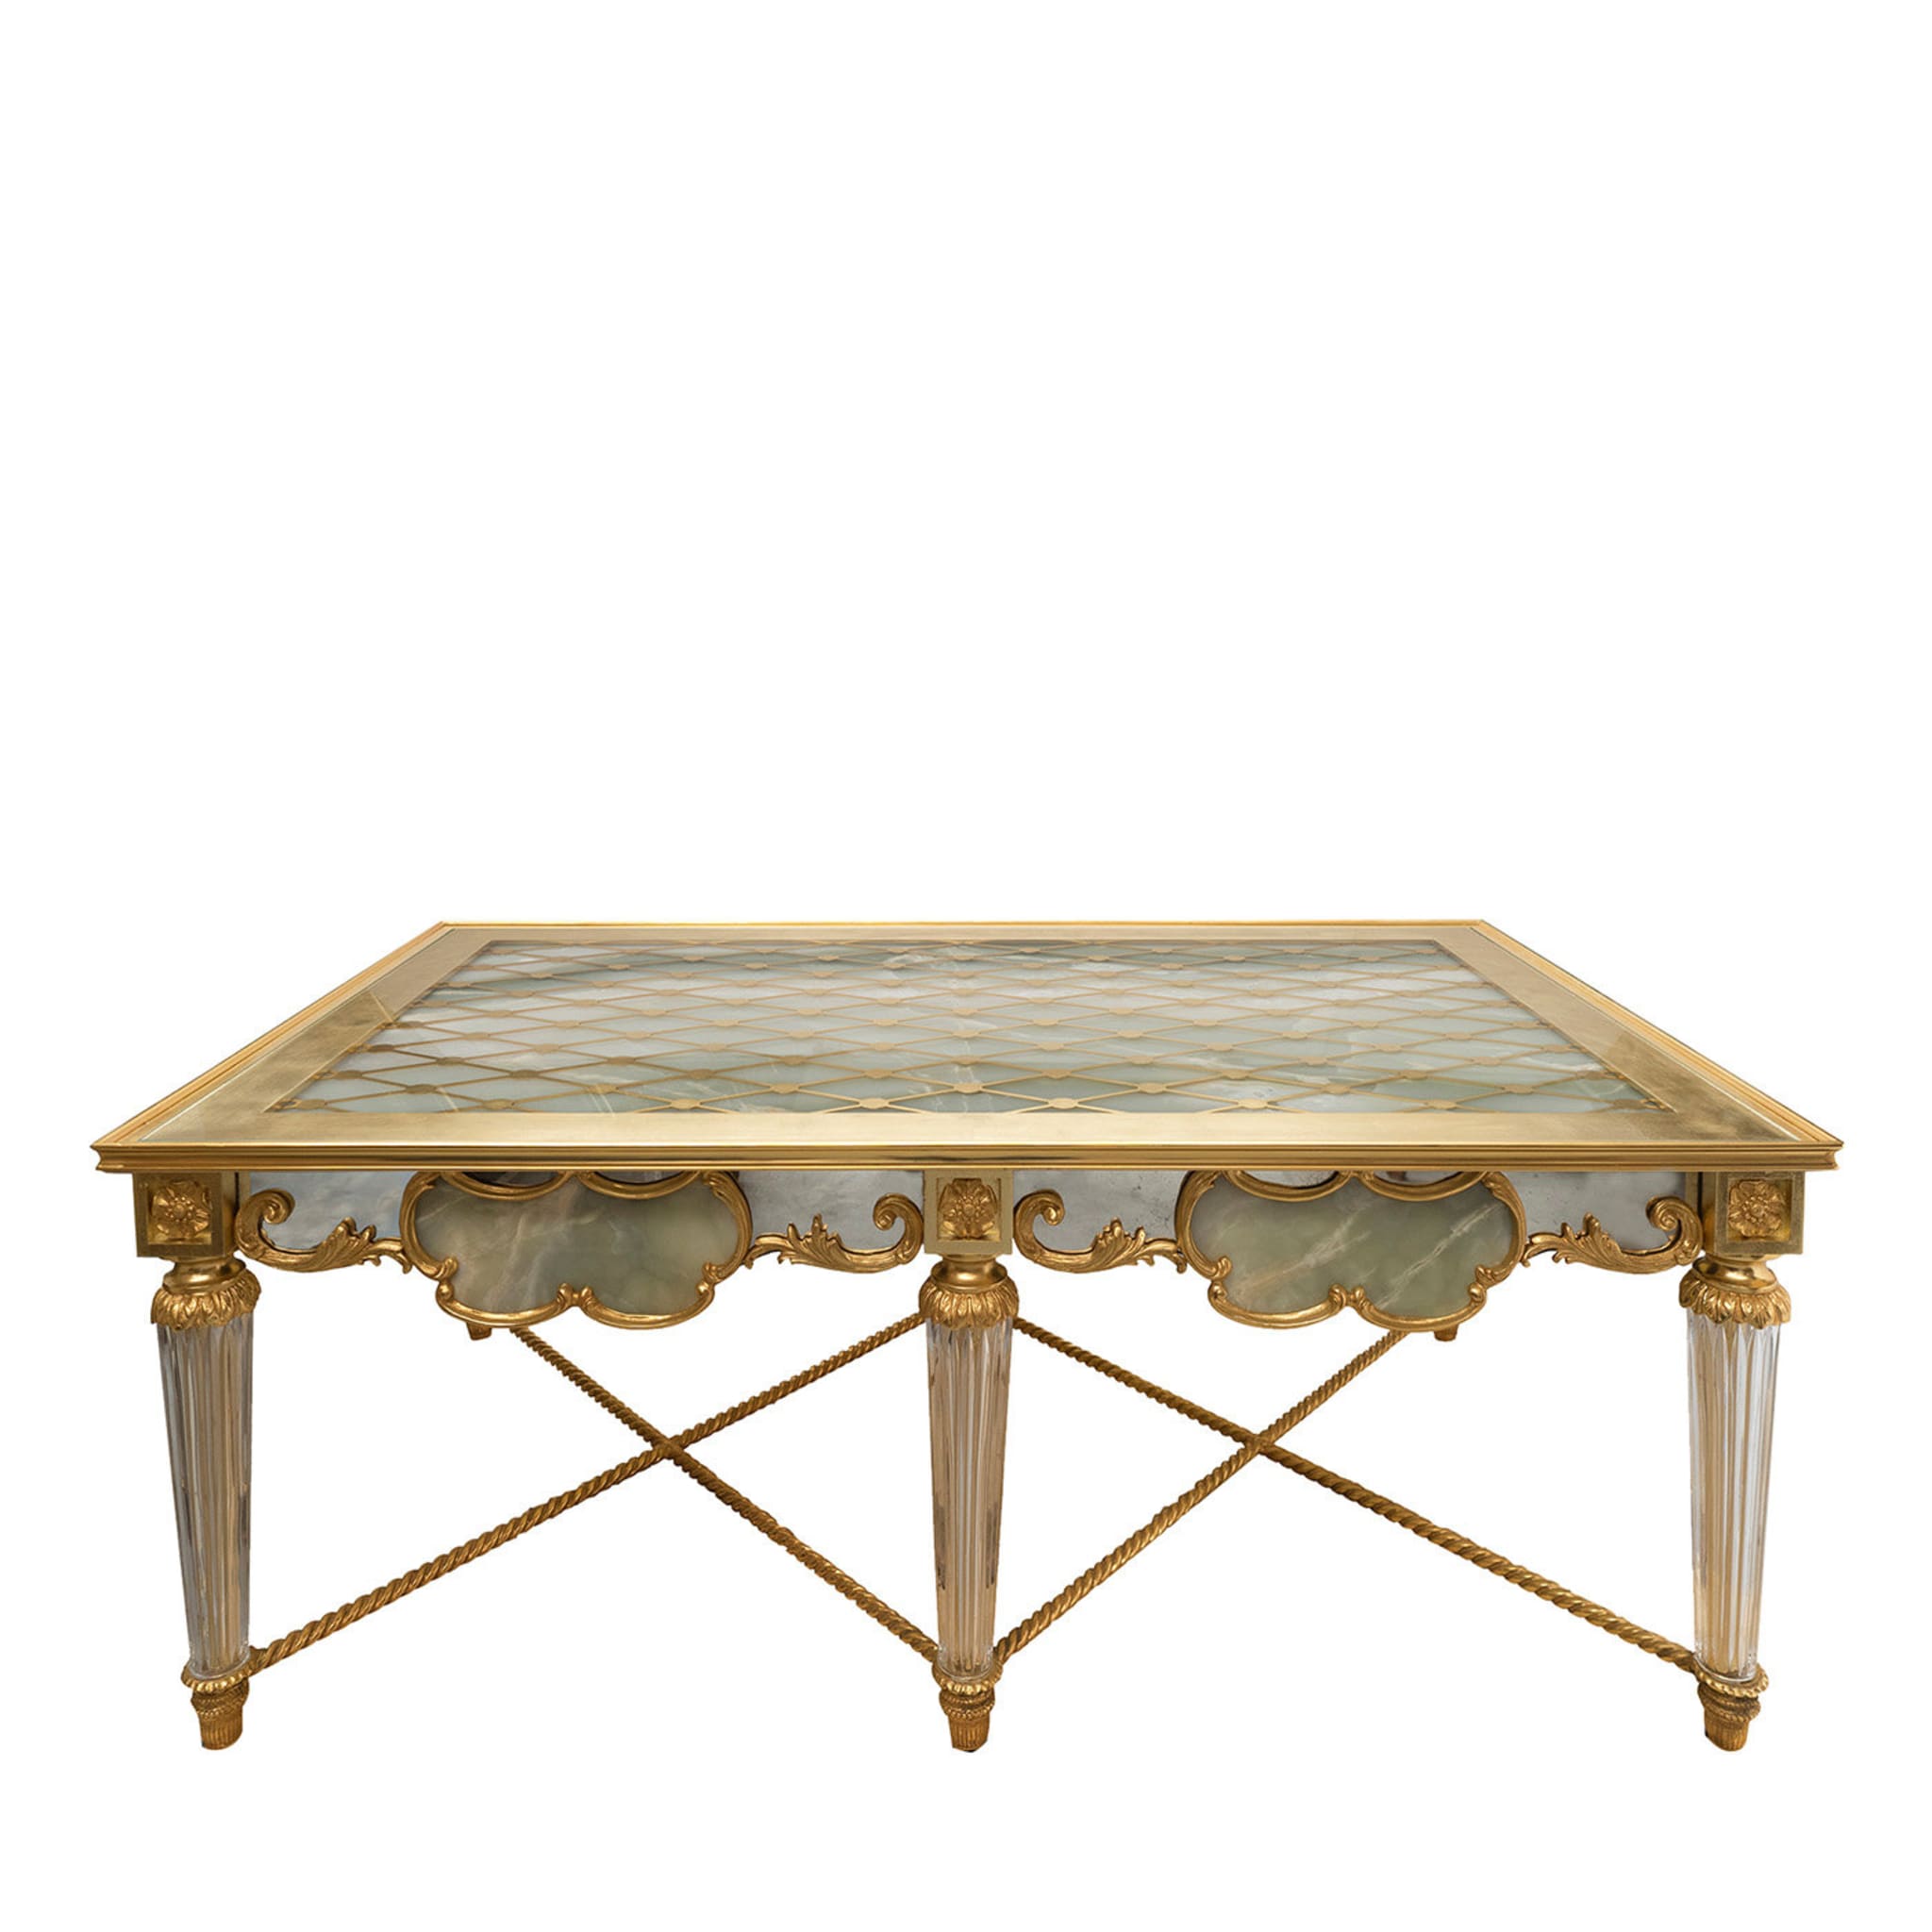 Louis XVI style Coffee Table #2 - Main view